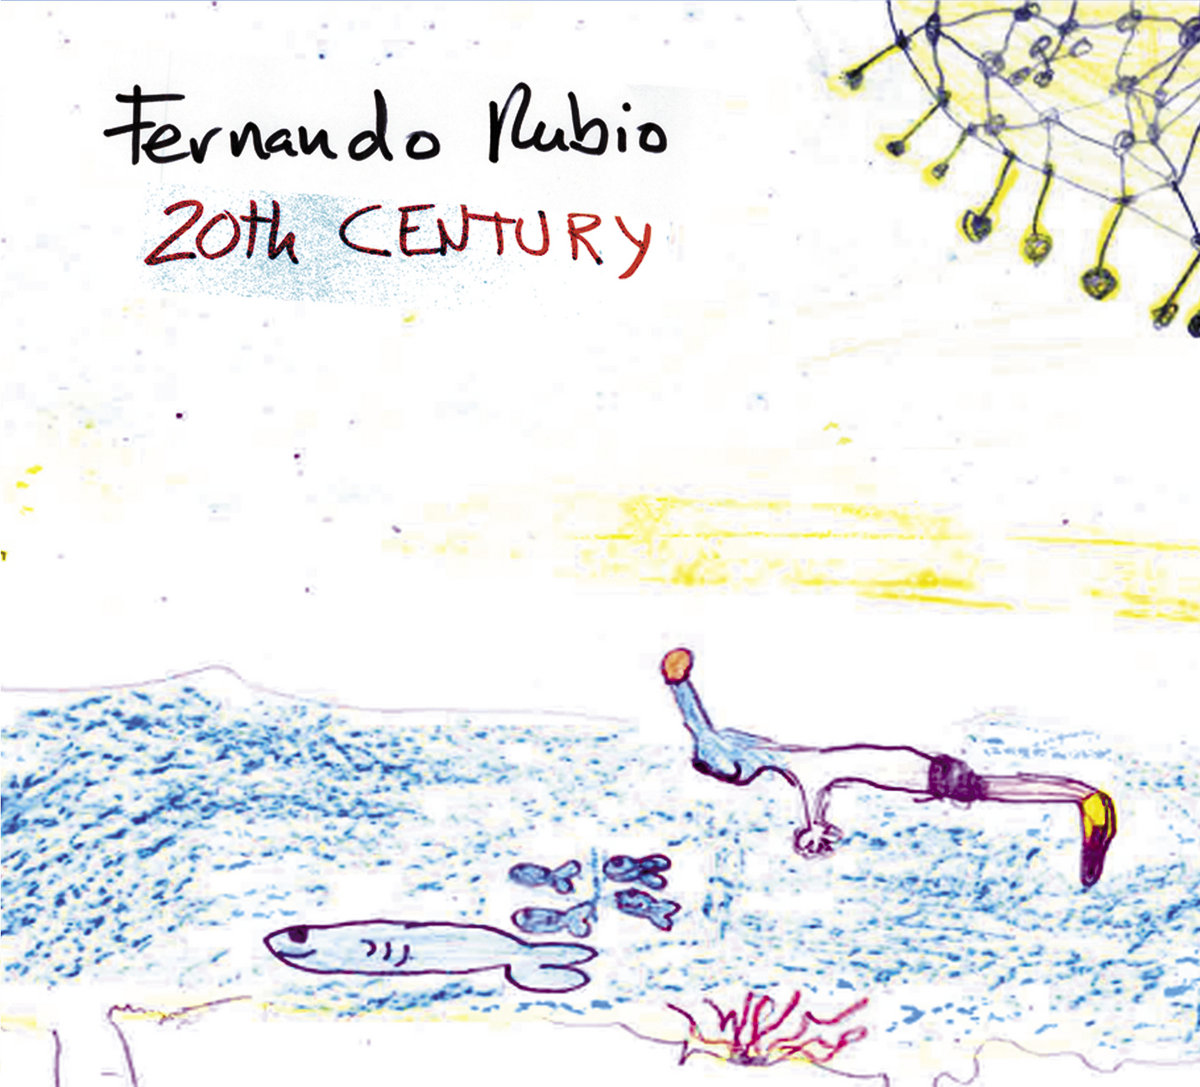 Fernando Rubio - 20th Century